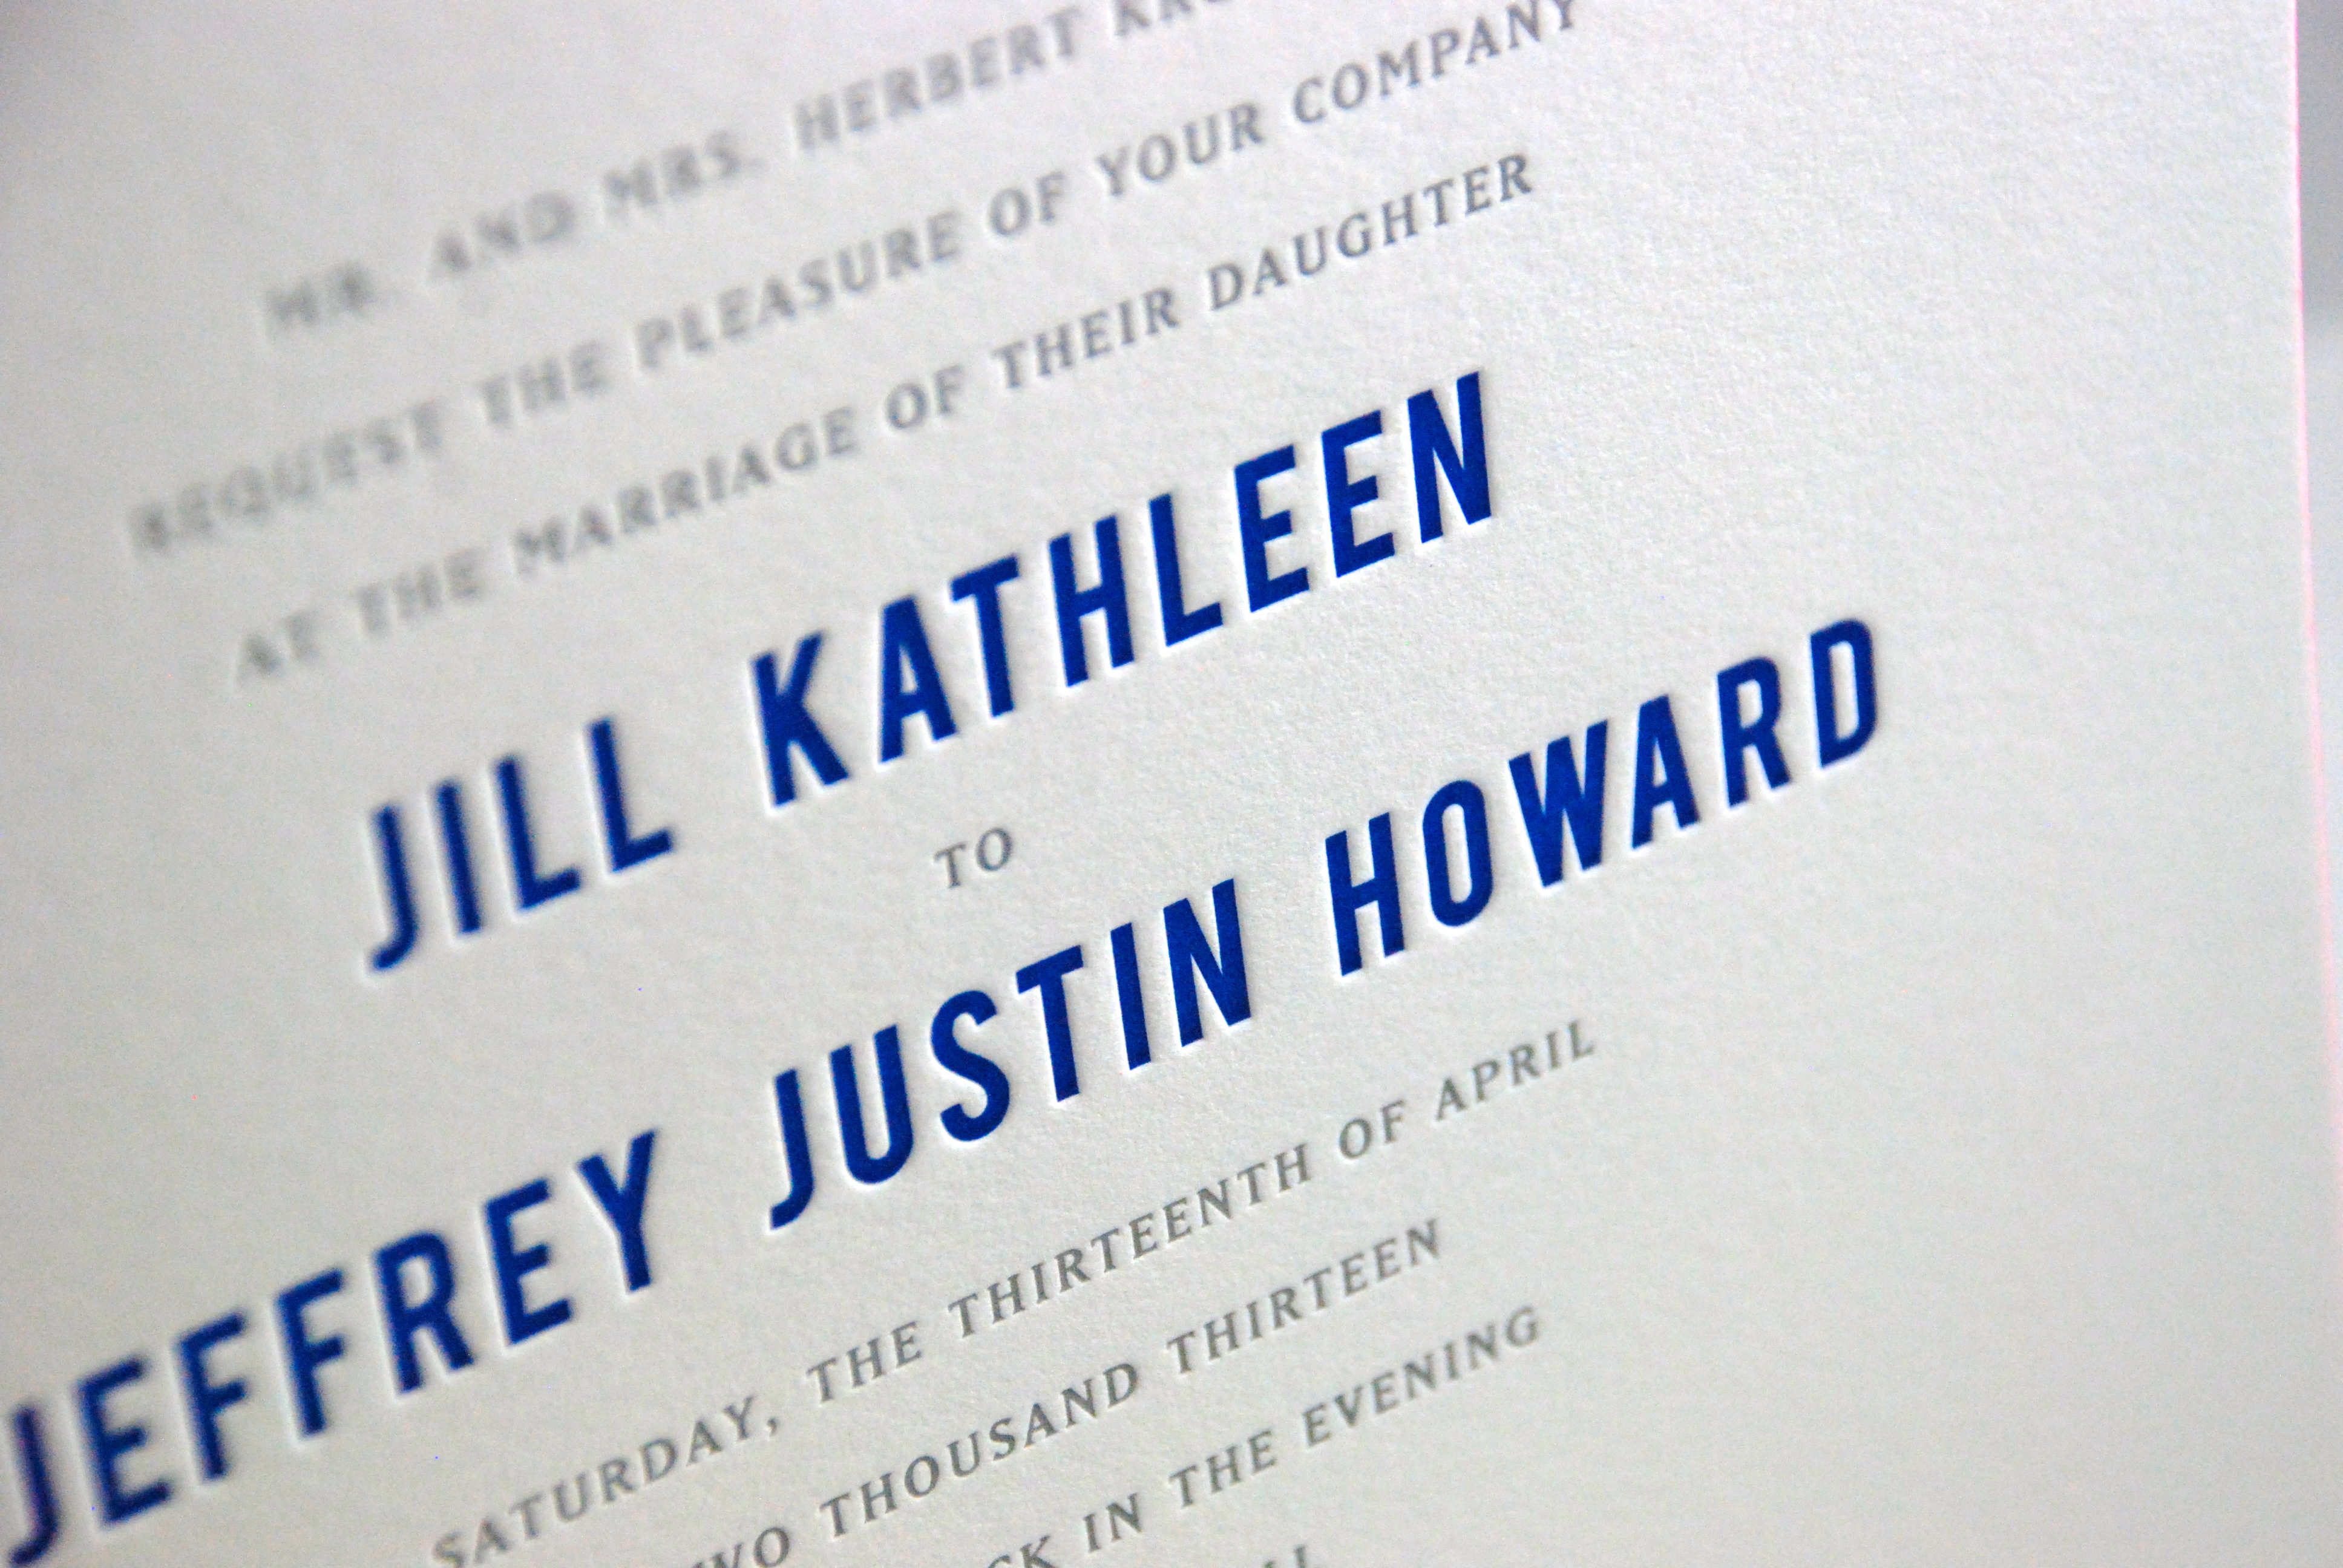 Letterpress printed wedding invitation